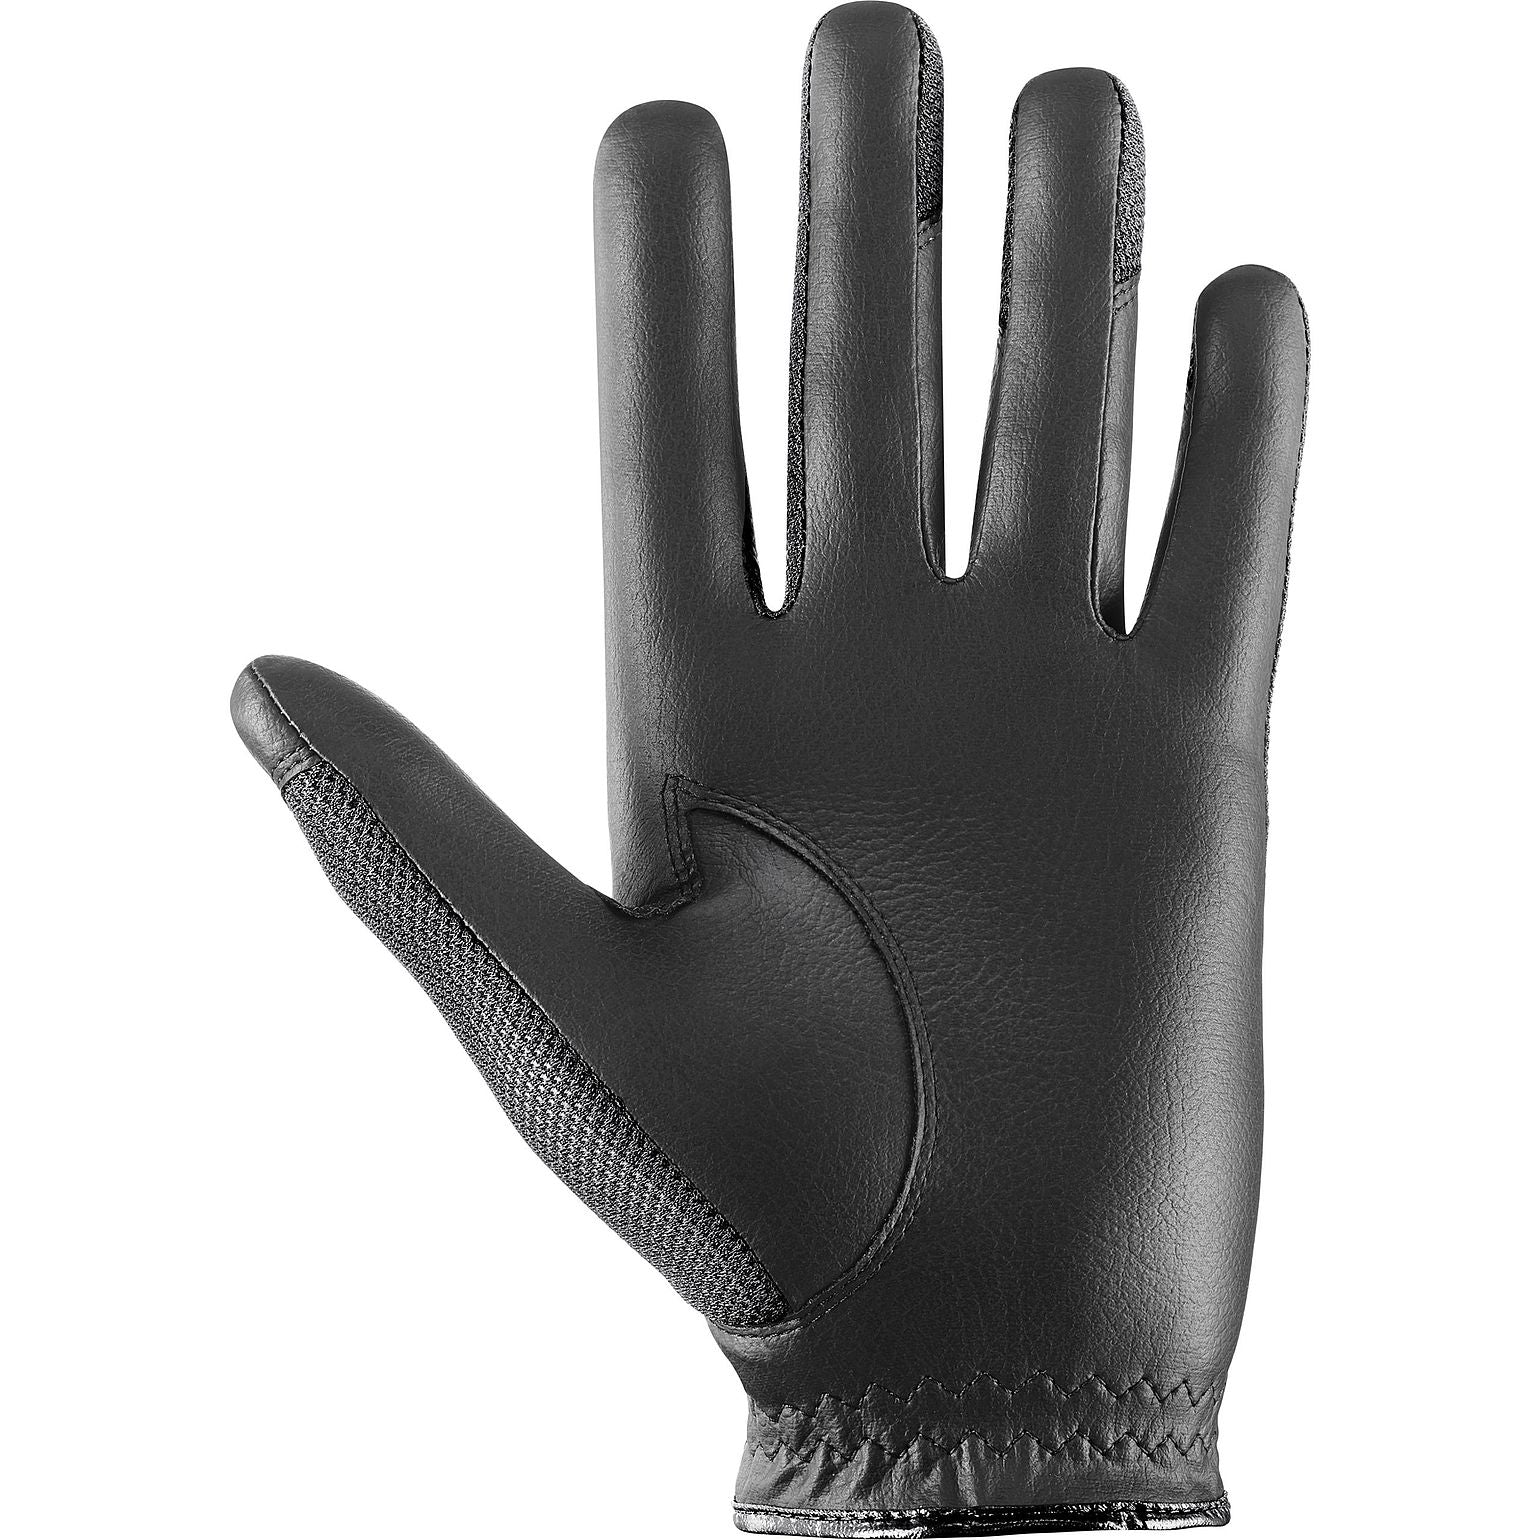 Uvex Sumair Gloves